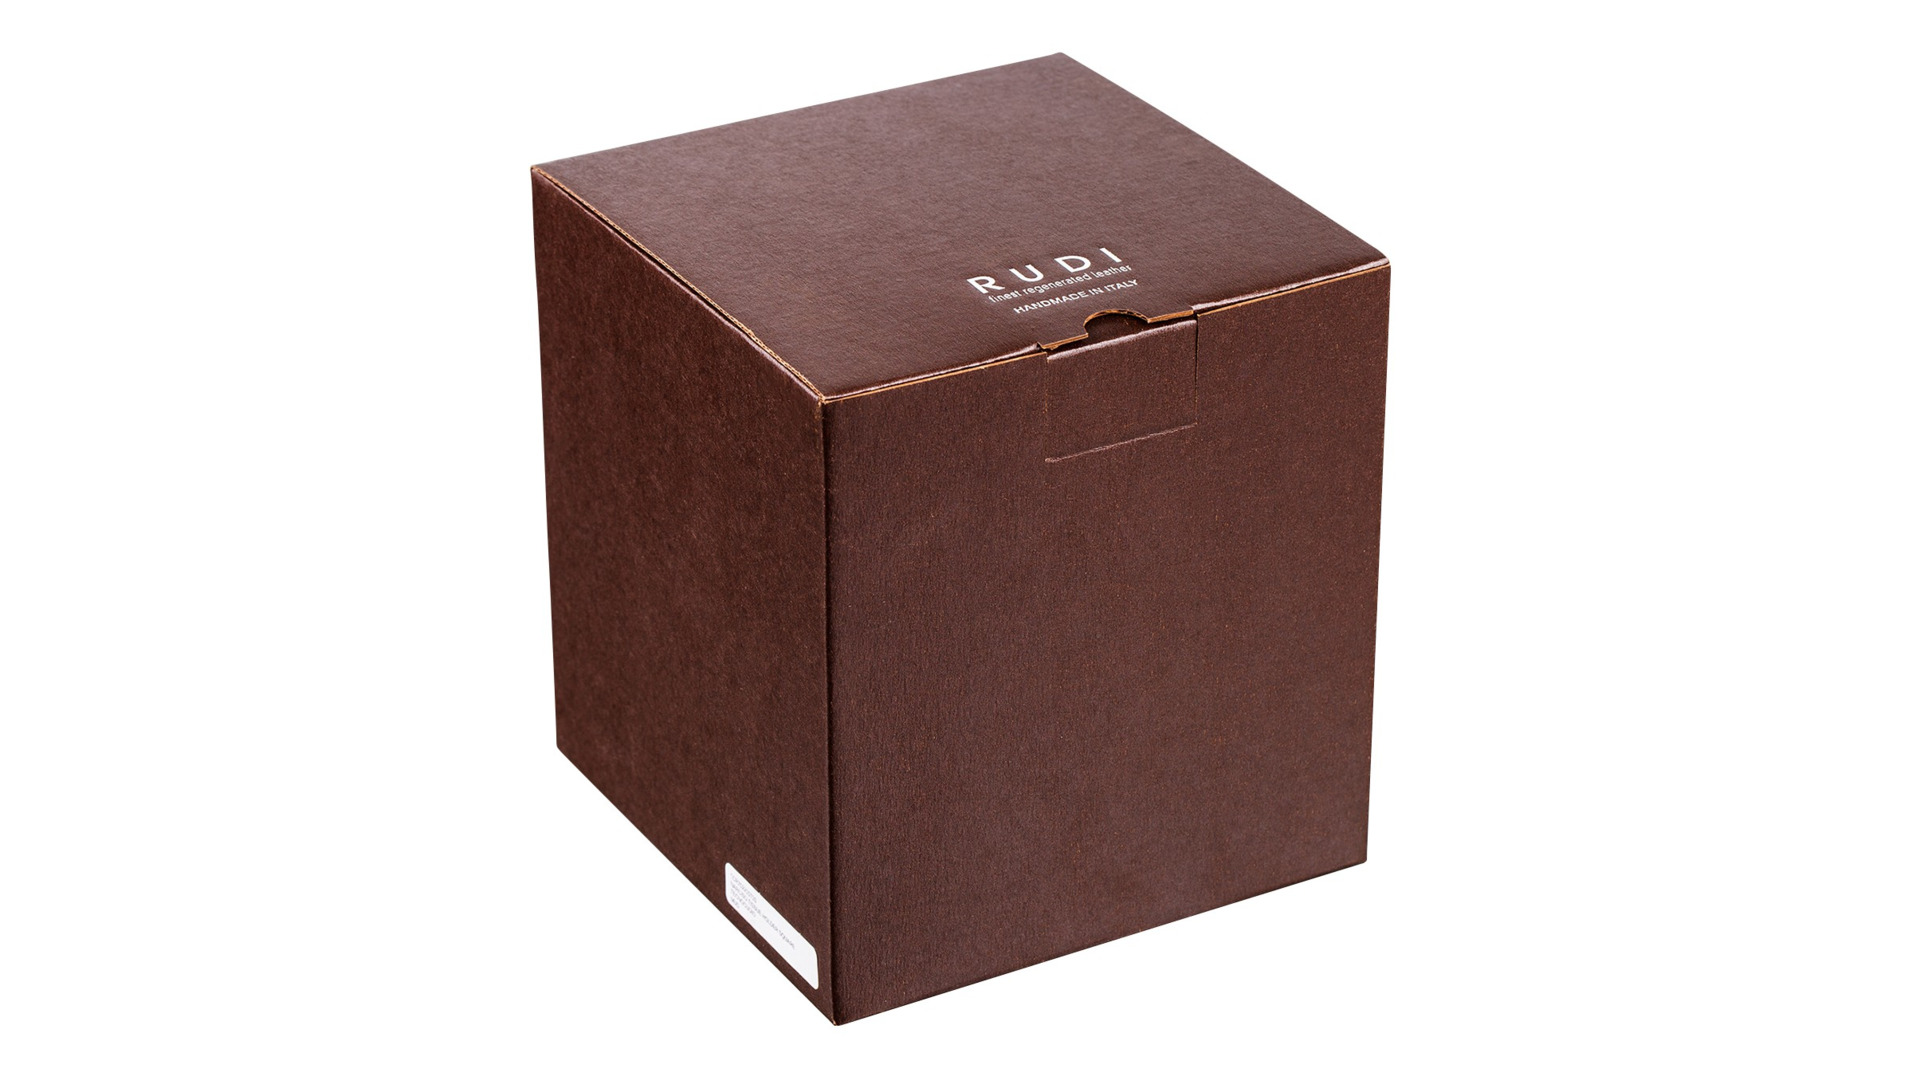 Салфетница квадратная Rudi Нарцисо 14х14 см, серо-коричневая